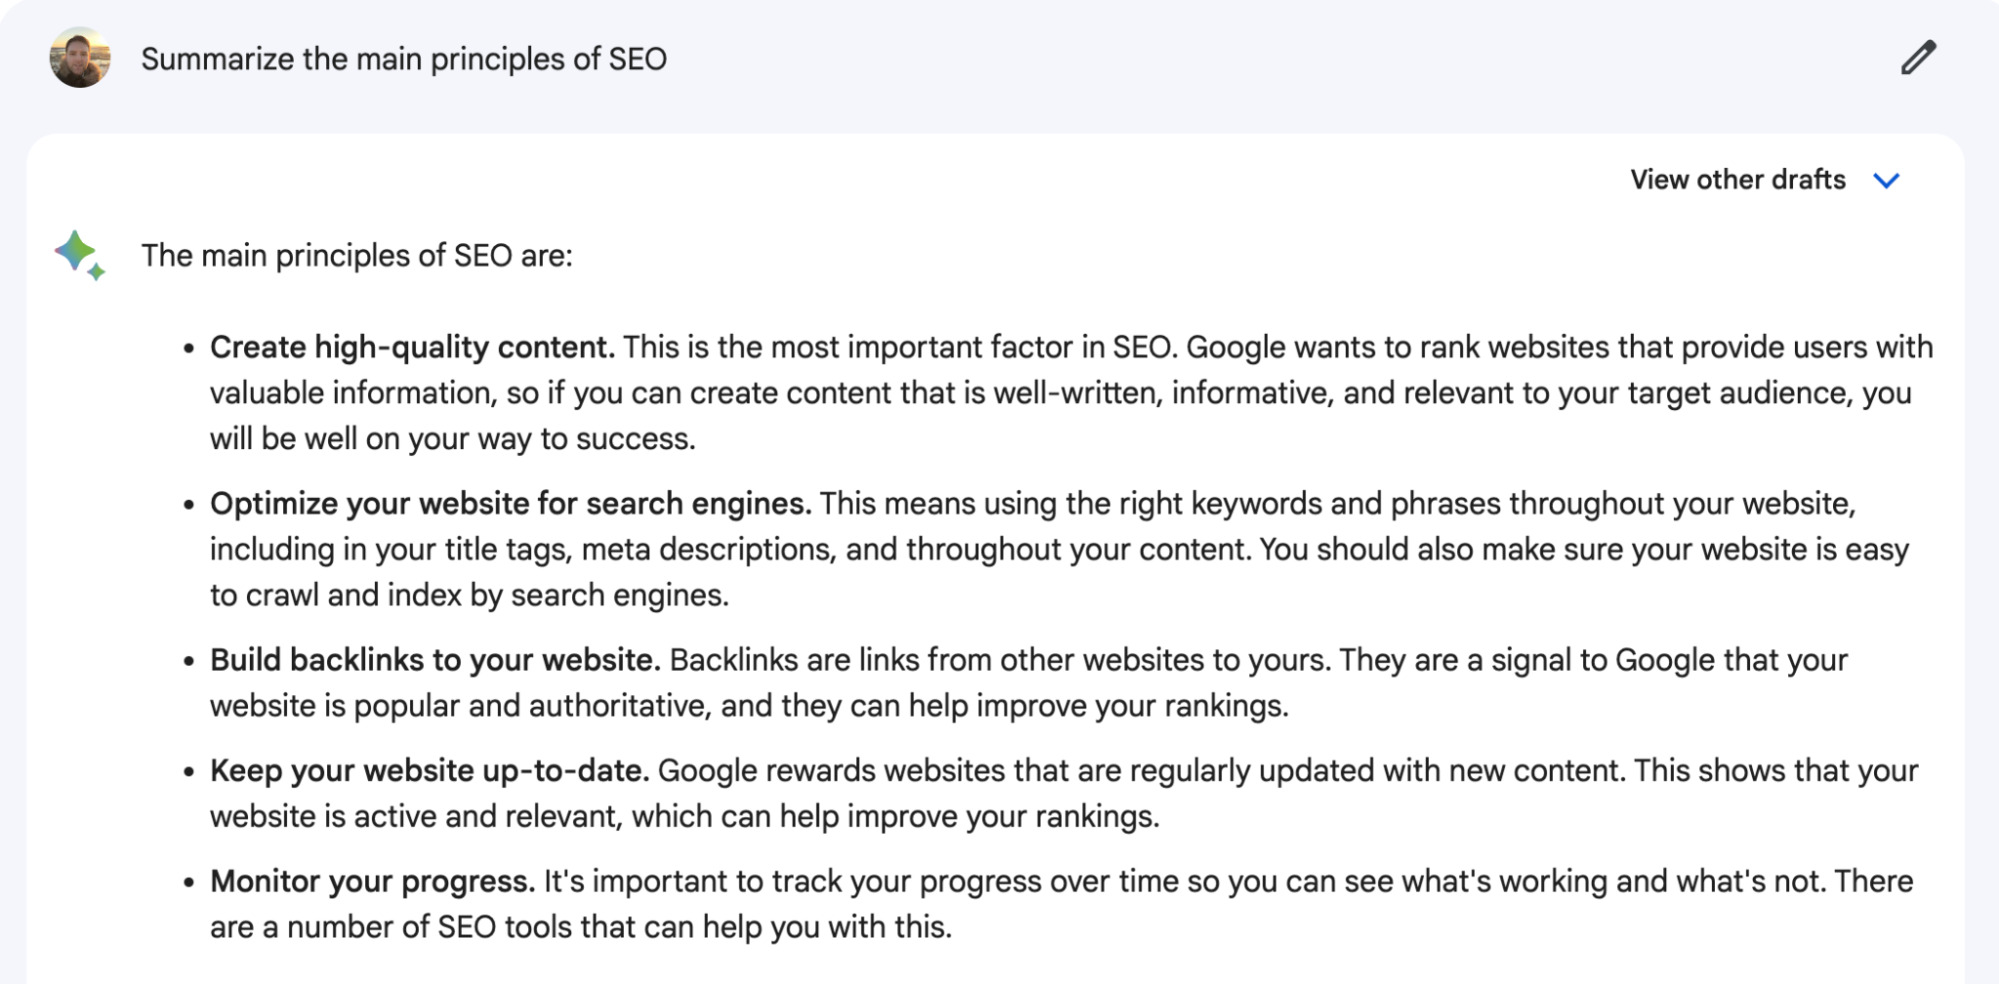 Asking Google Bard to summarize the main principles of SEO 
